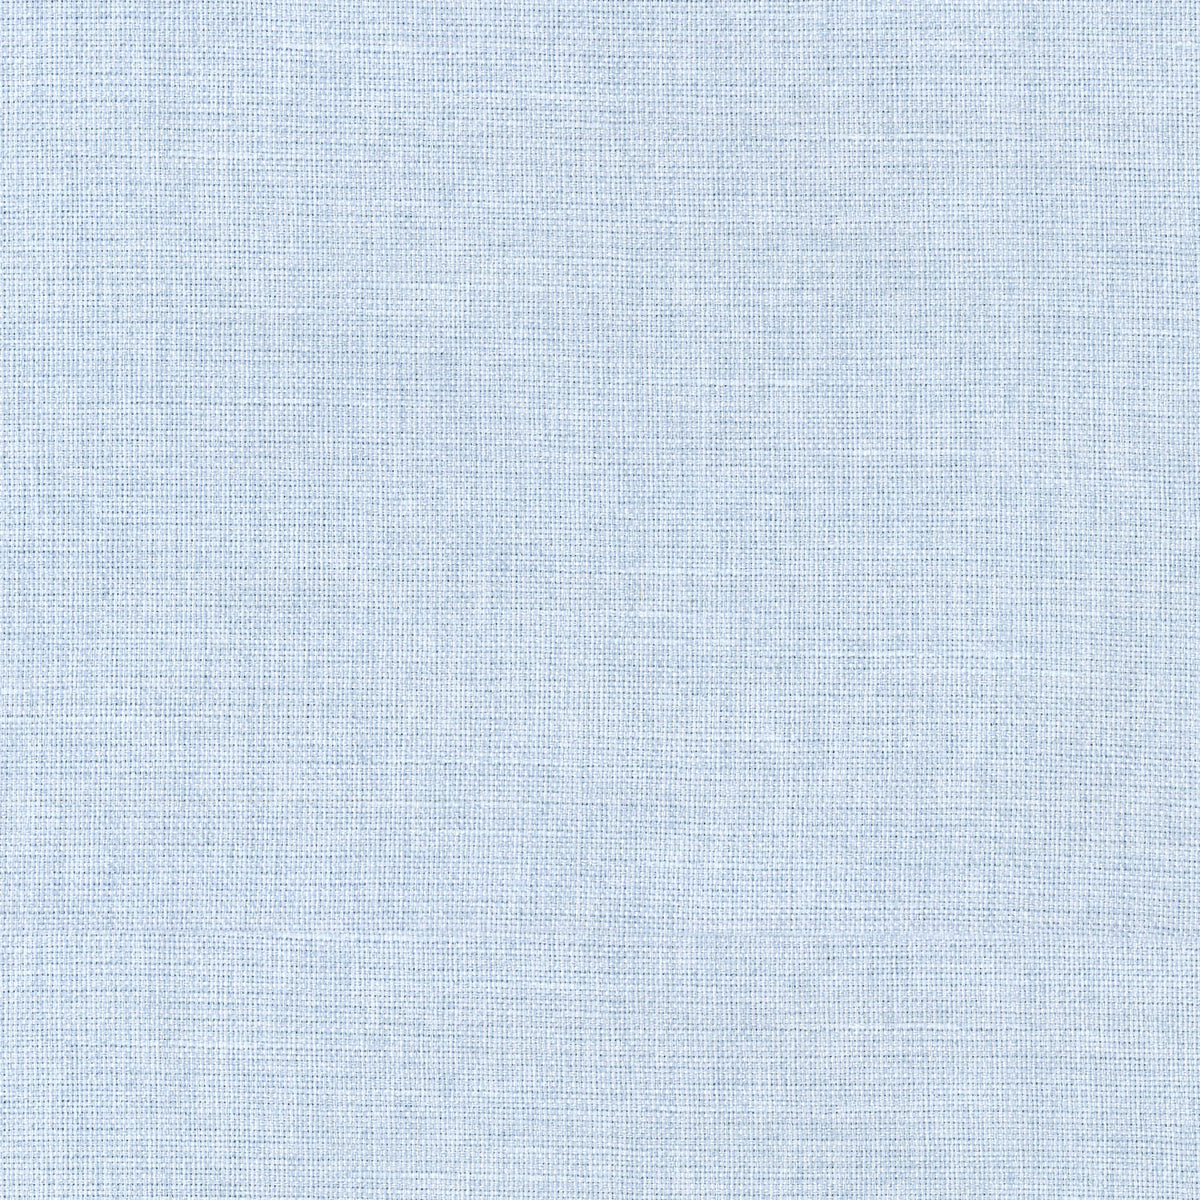 P/K Lifestyles Reba - Light Blue 409118 Fabric Swatch